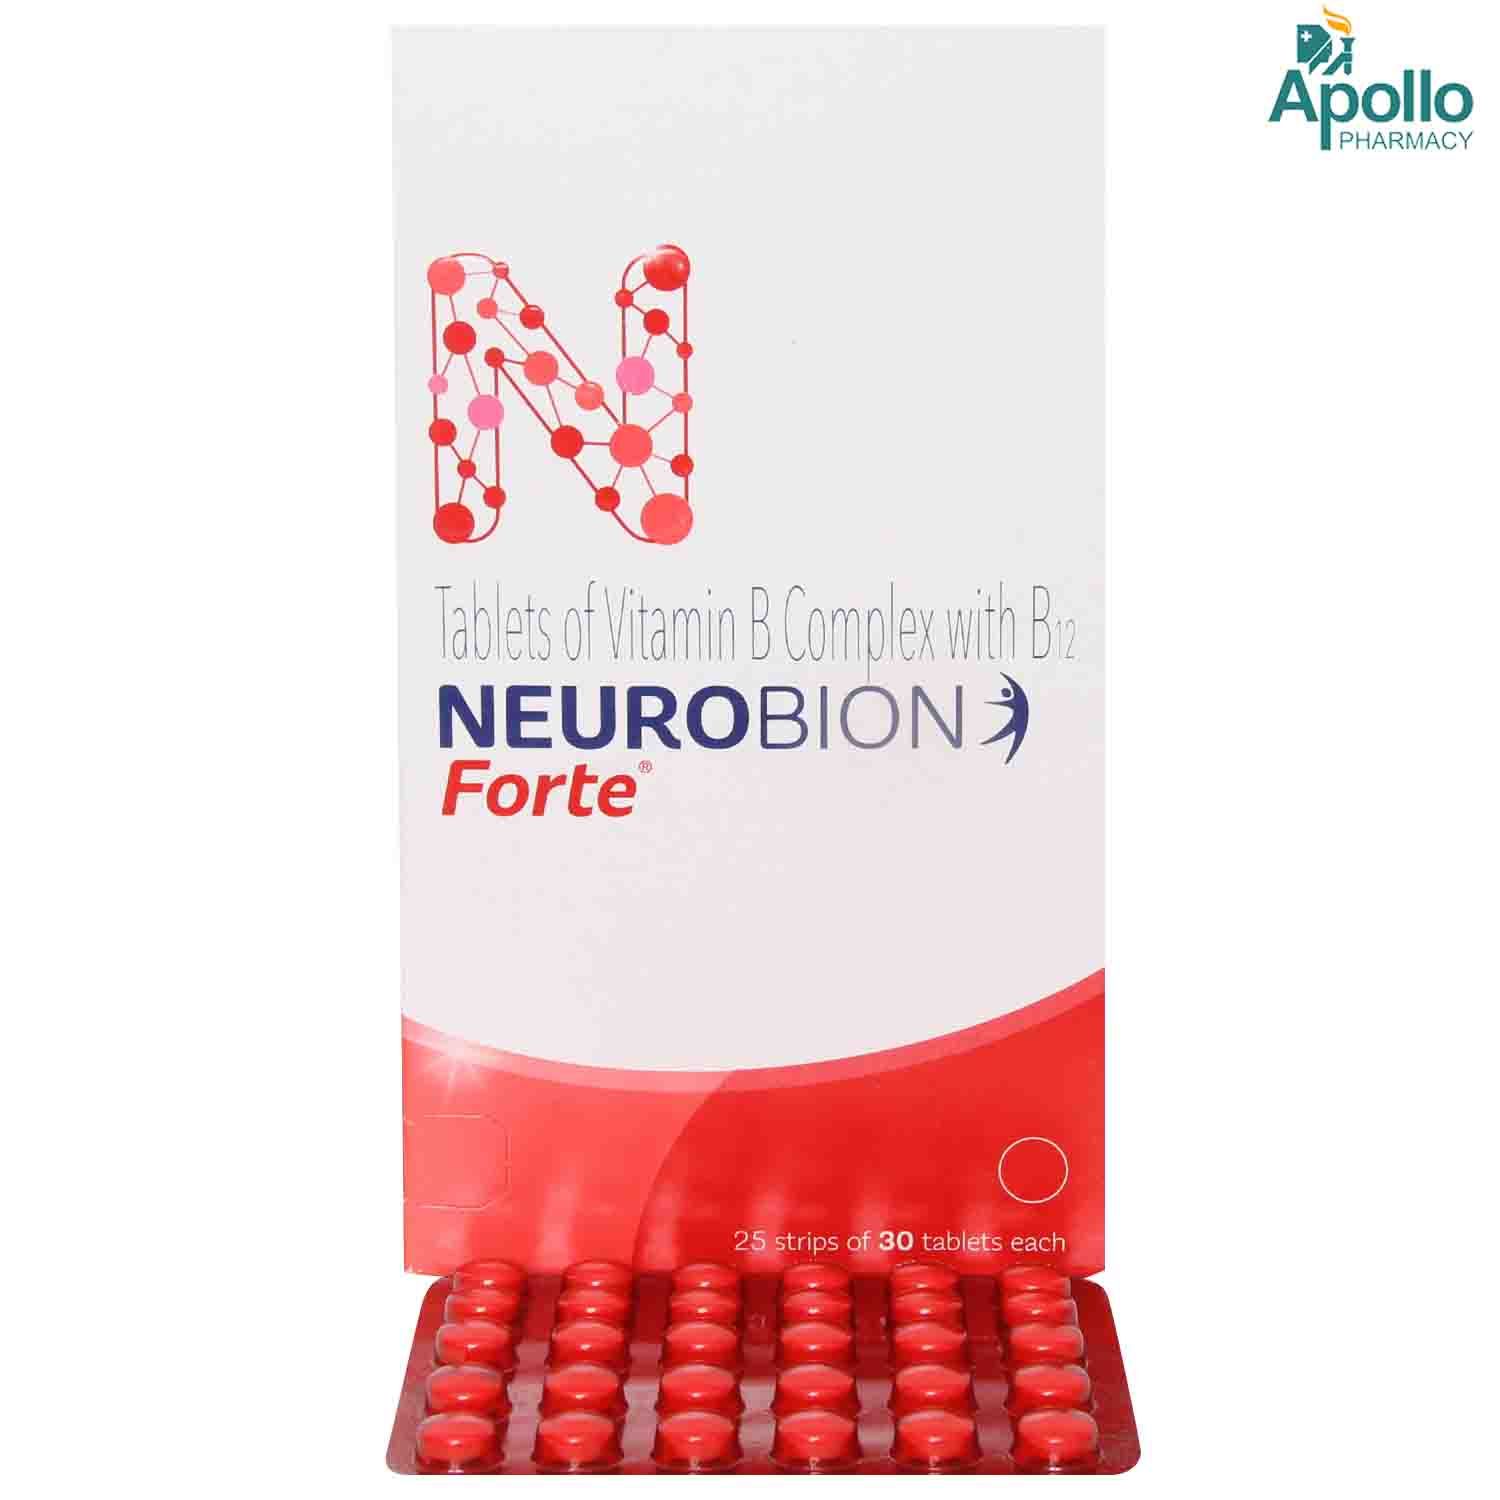 Neurobion Forte Tablet 30's, Pack of 30 TABLETS